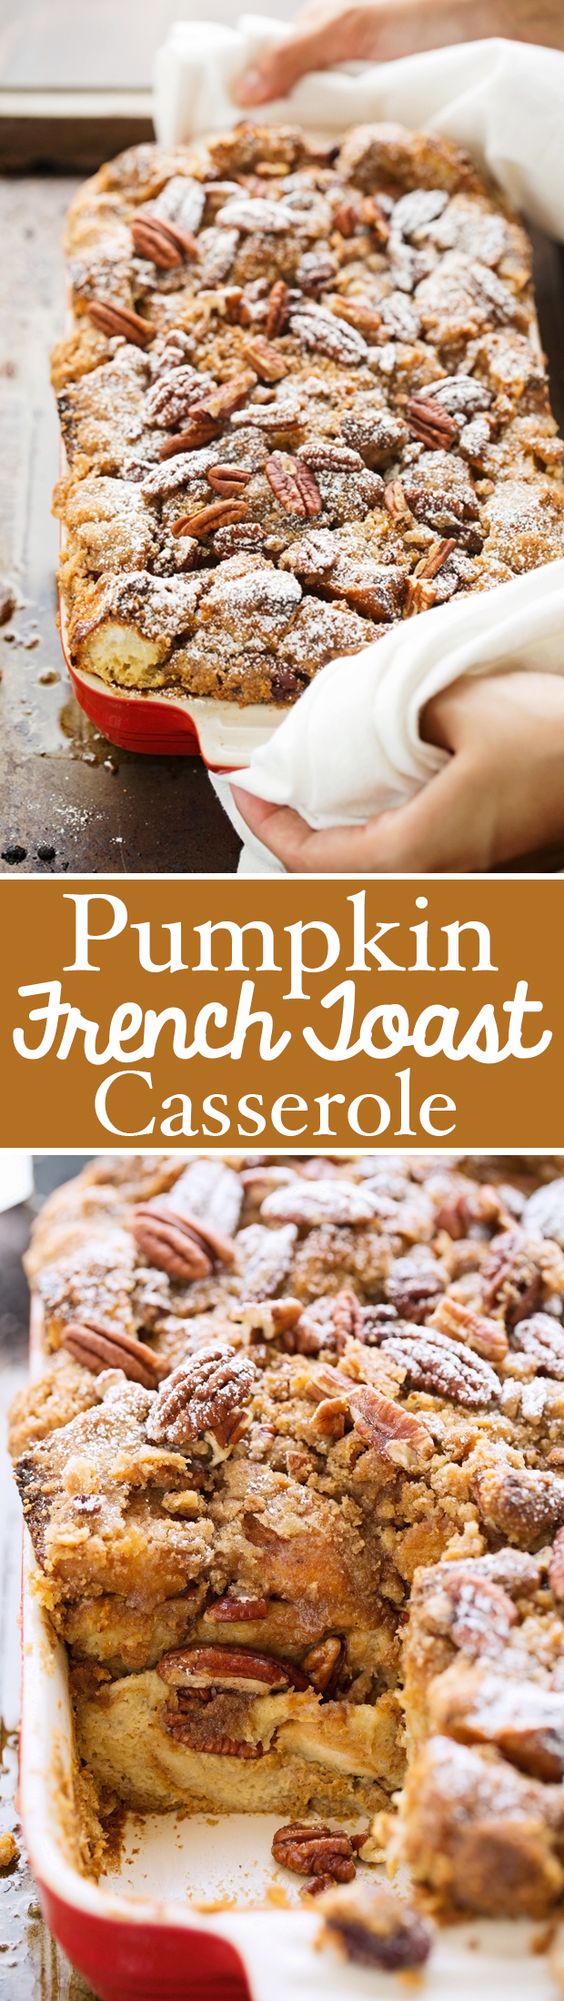 Pumpkin French Toast Casserole